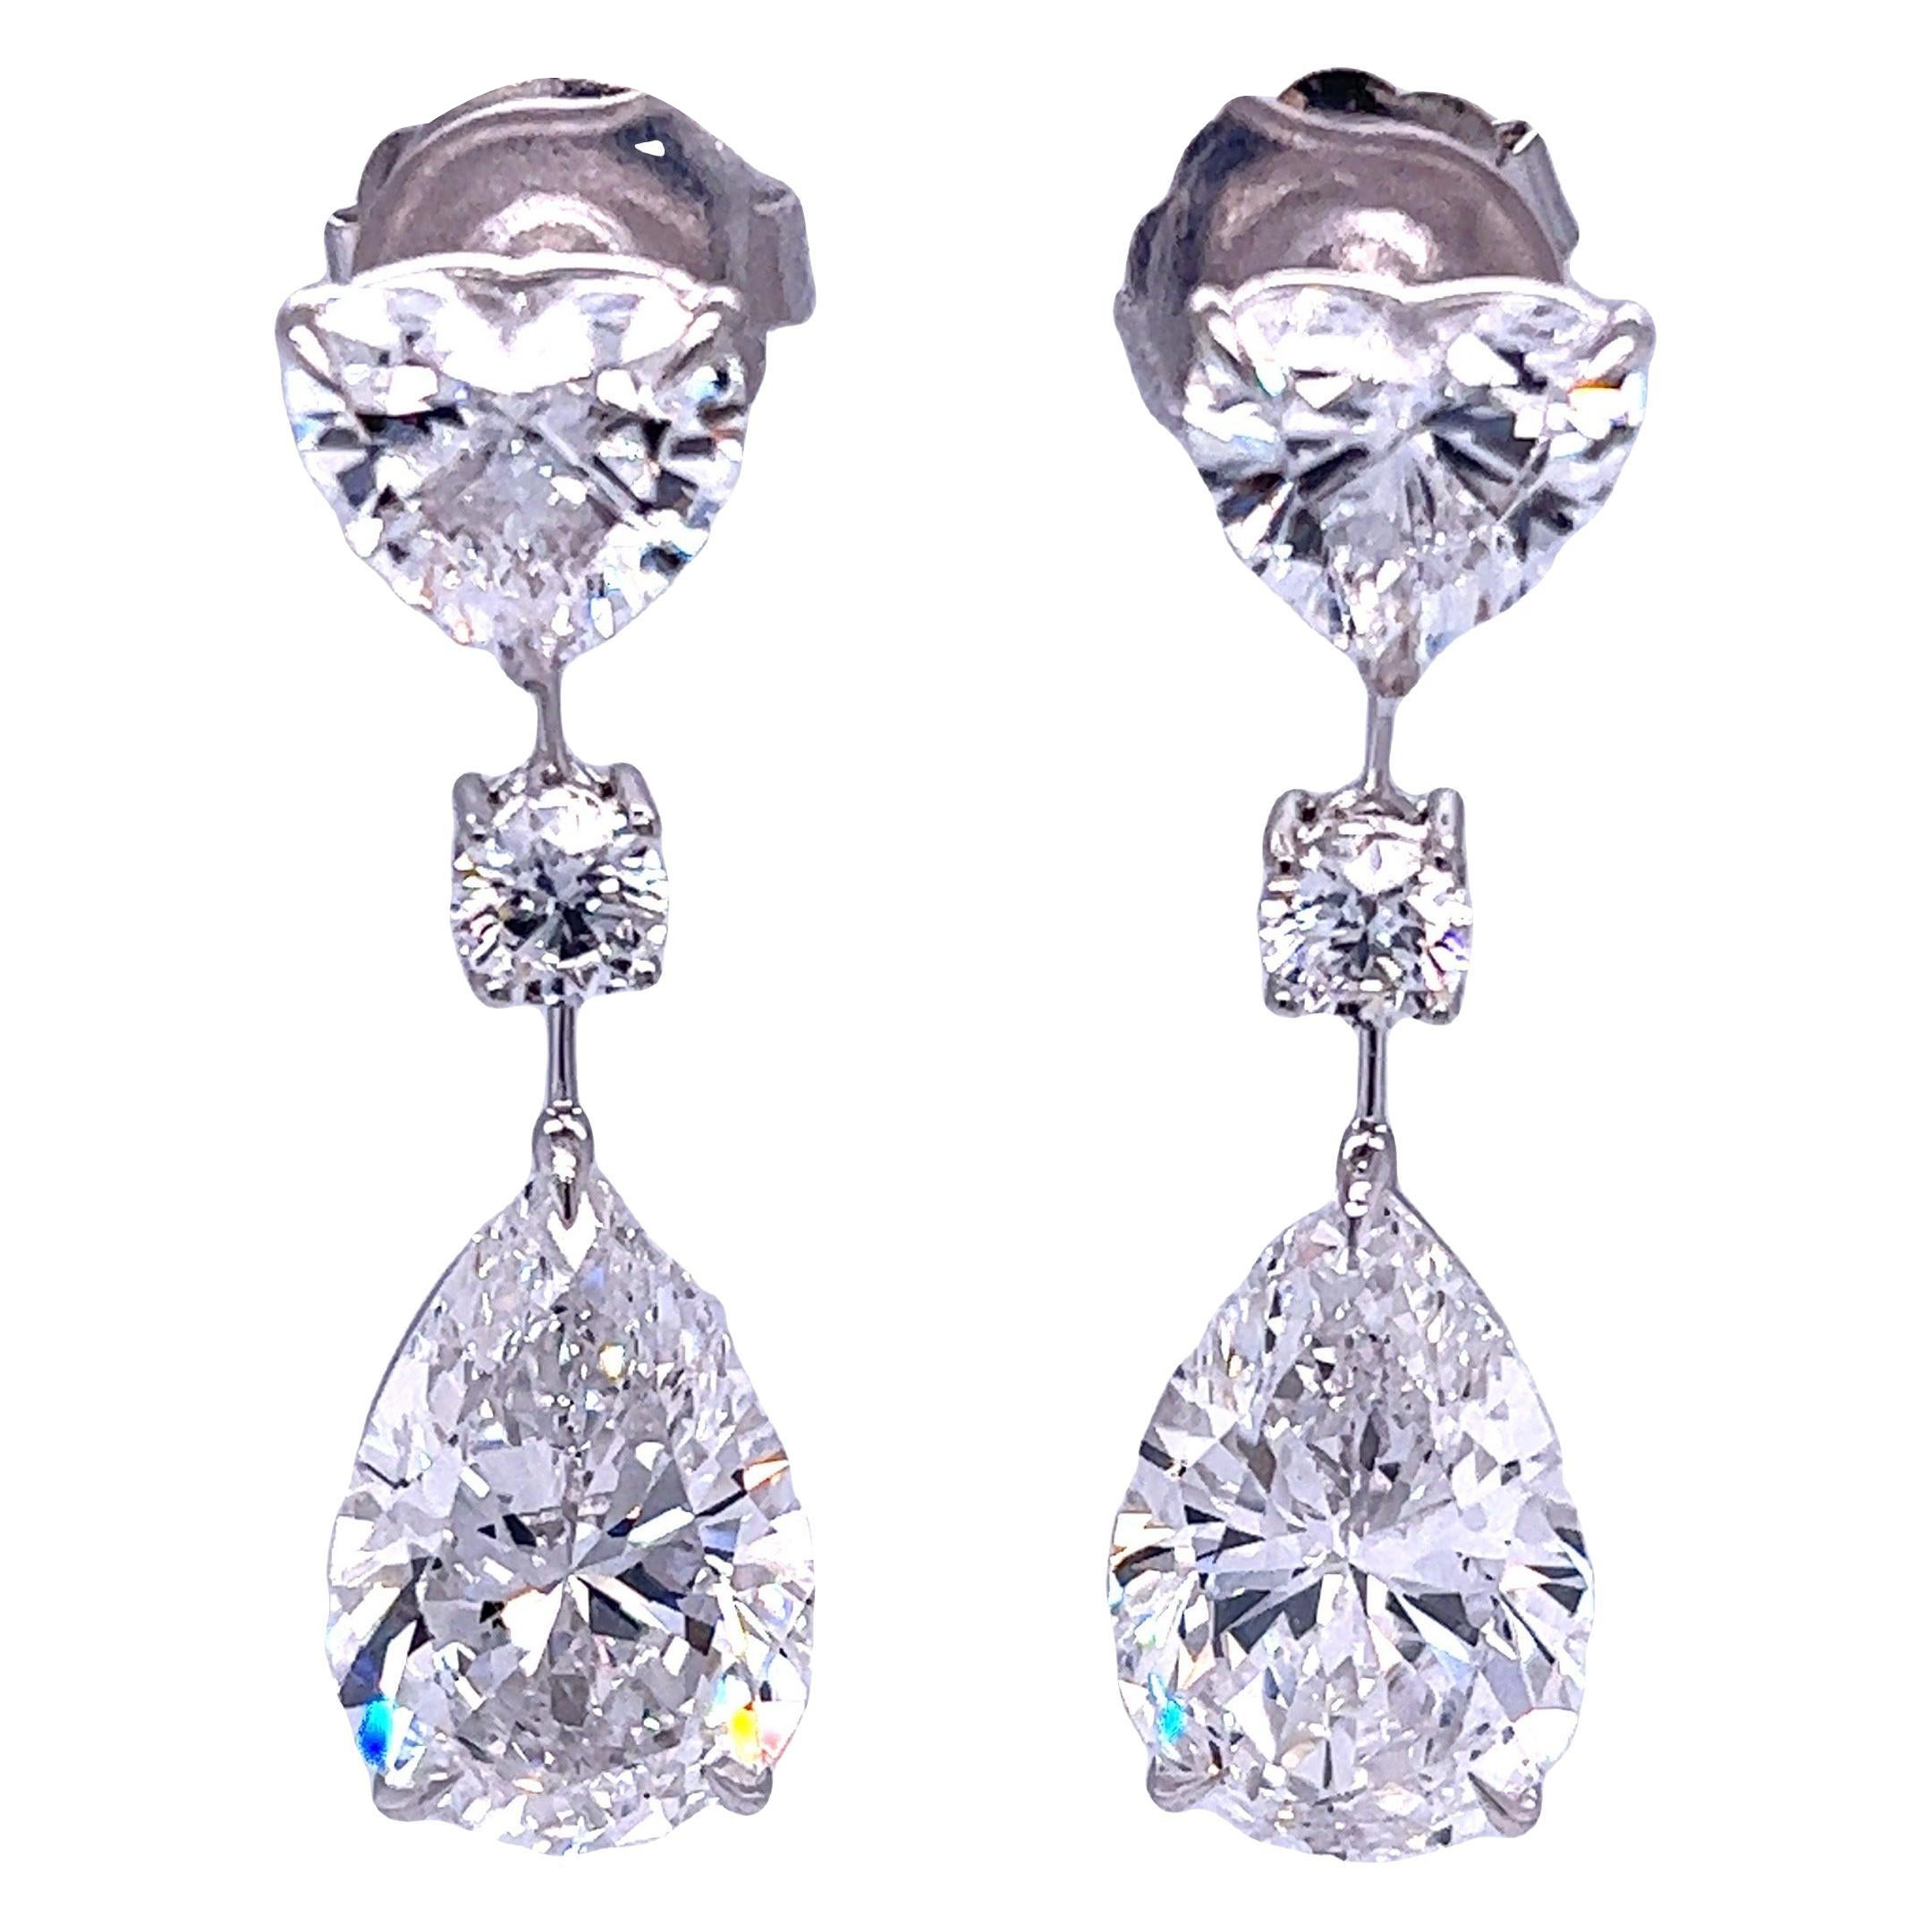 David Rosenberg 16.72 Ct D Flawless GIA Pear Round & Heart Shape Diamond Earring For Sale